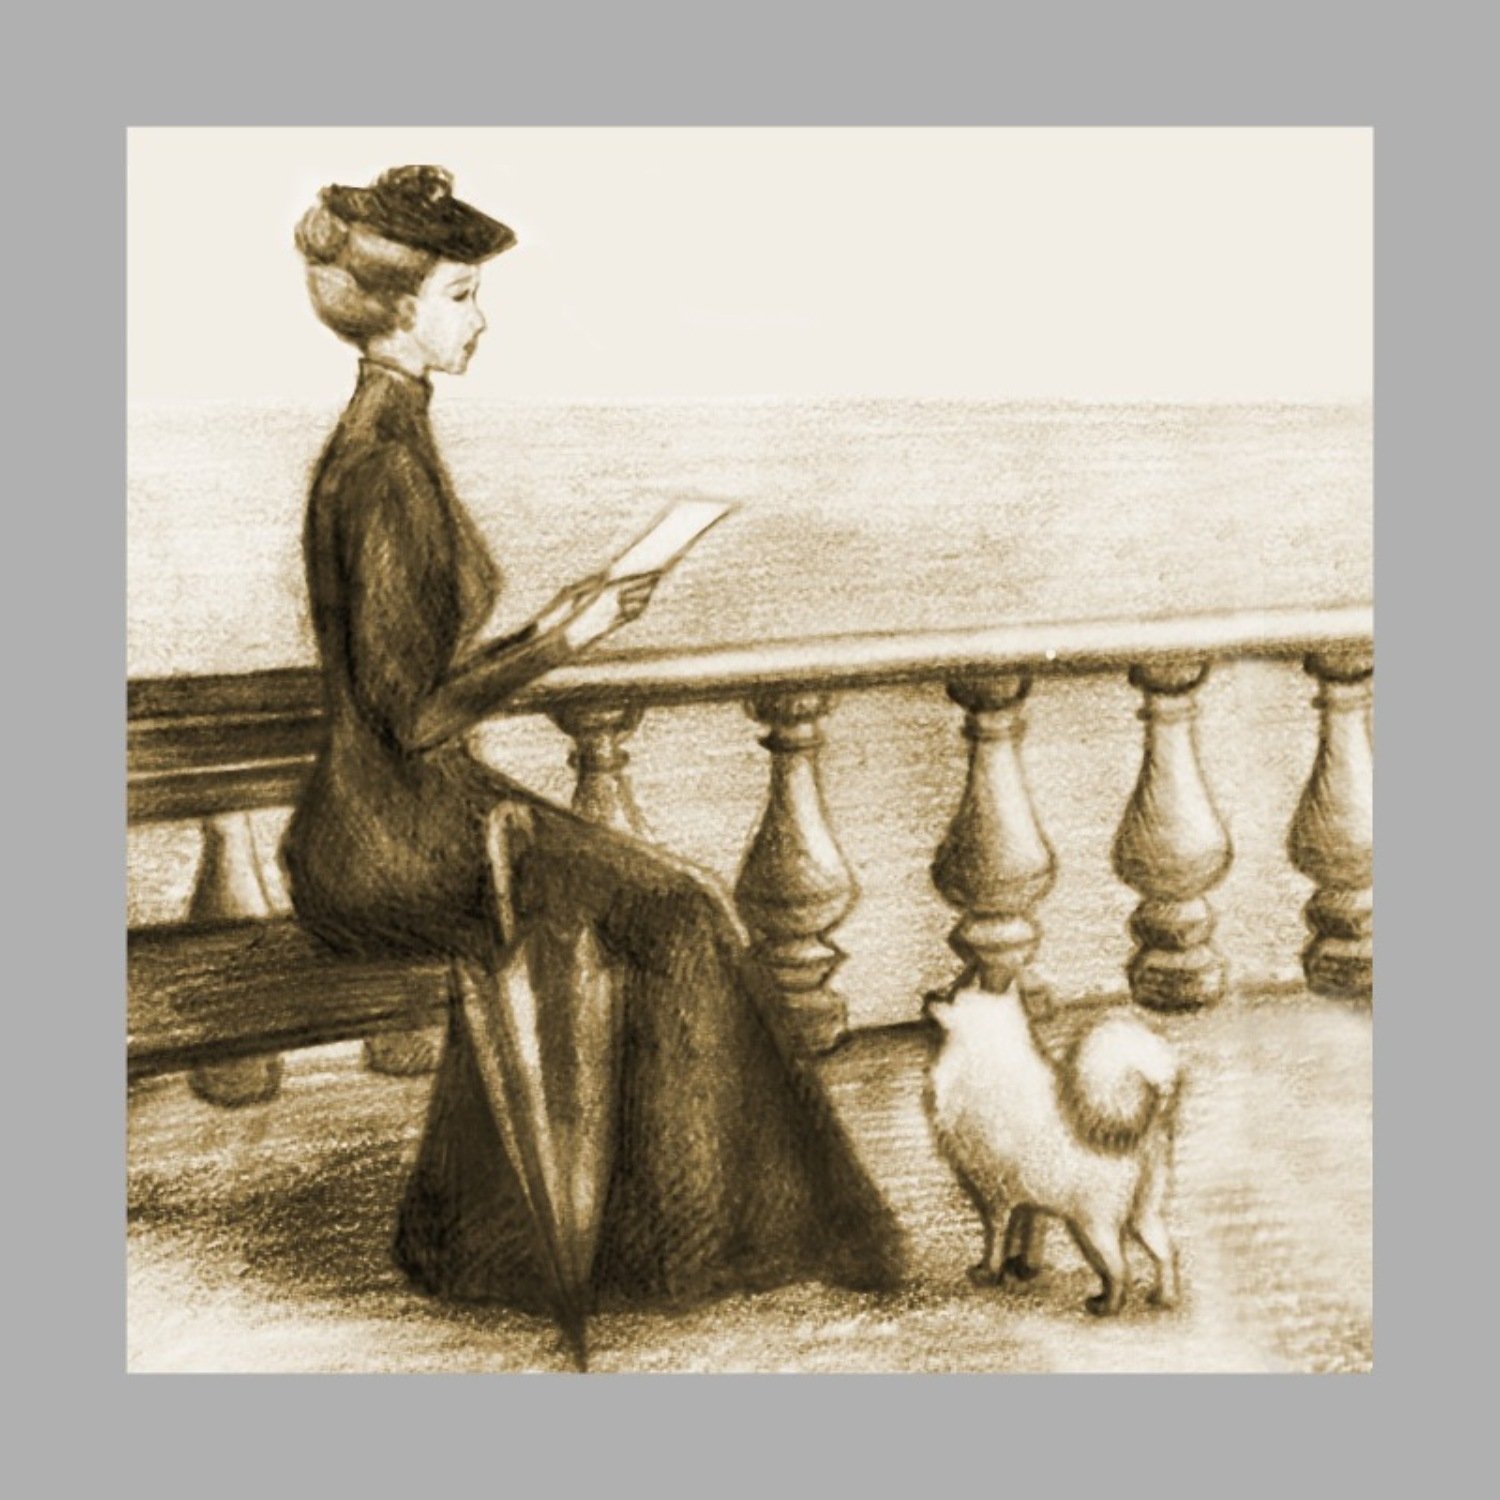 Дама с собачкой проблематика. Иллюстрации к рассказу Чехова дама с собачкой. Дама с собачкой Чехов Гуров.